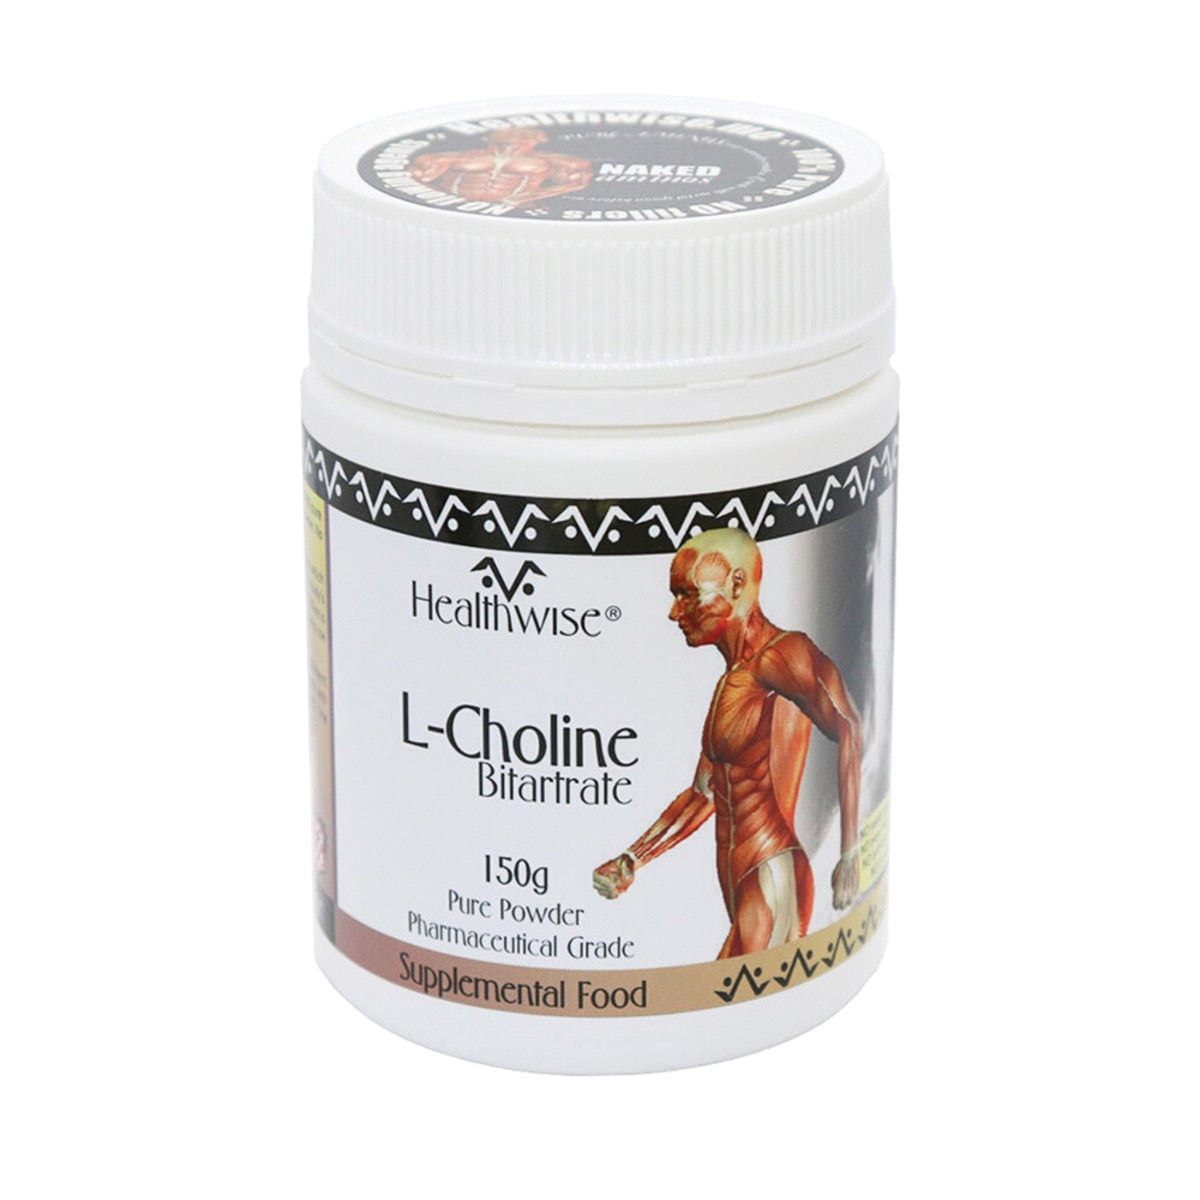 Healthwise L-Choline Bitartrate Powder 150g Australia